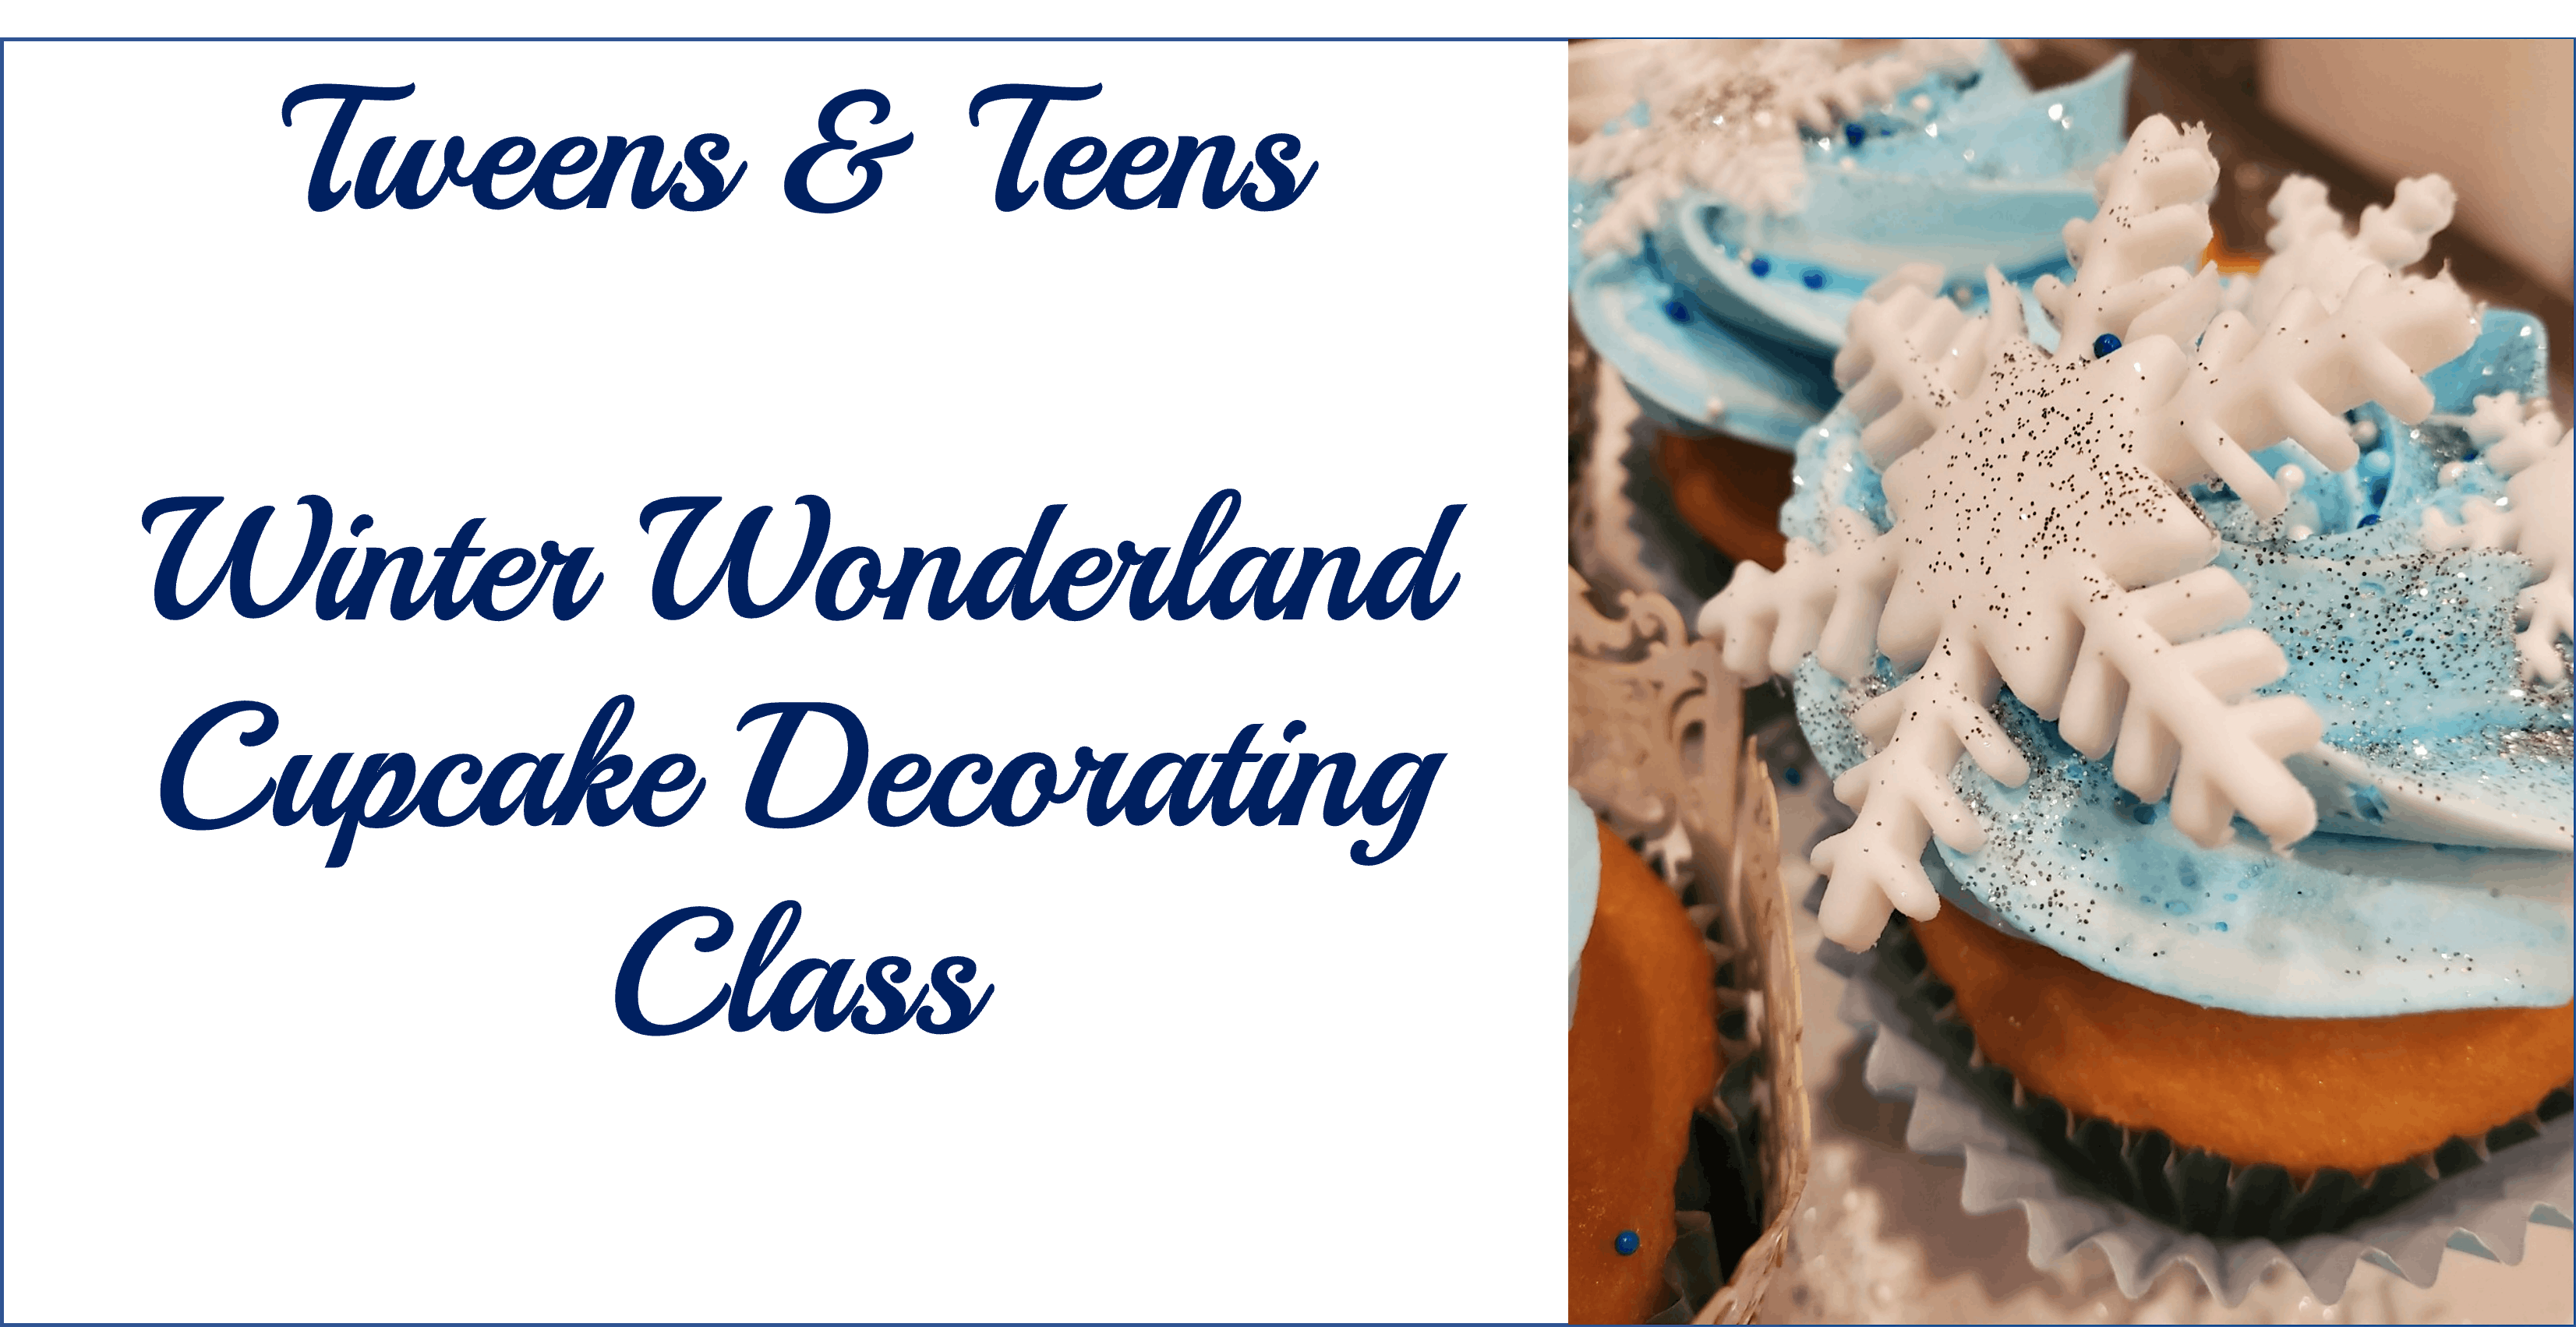 Tweens & Teens Winter Wonderland Cupcake Decorating Class